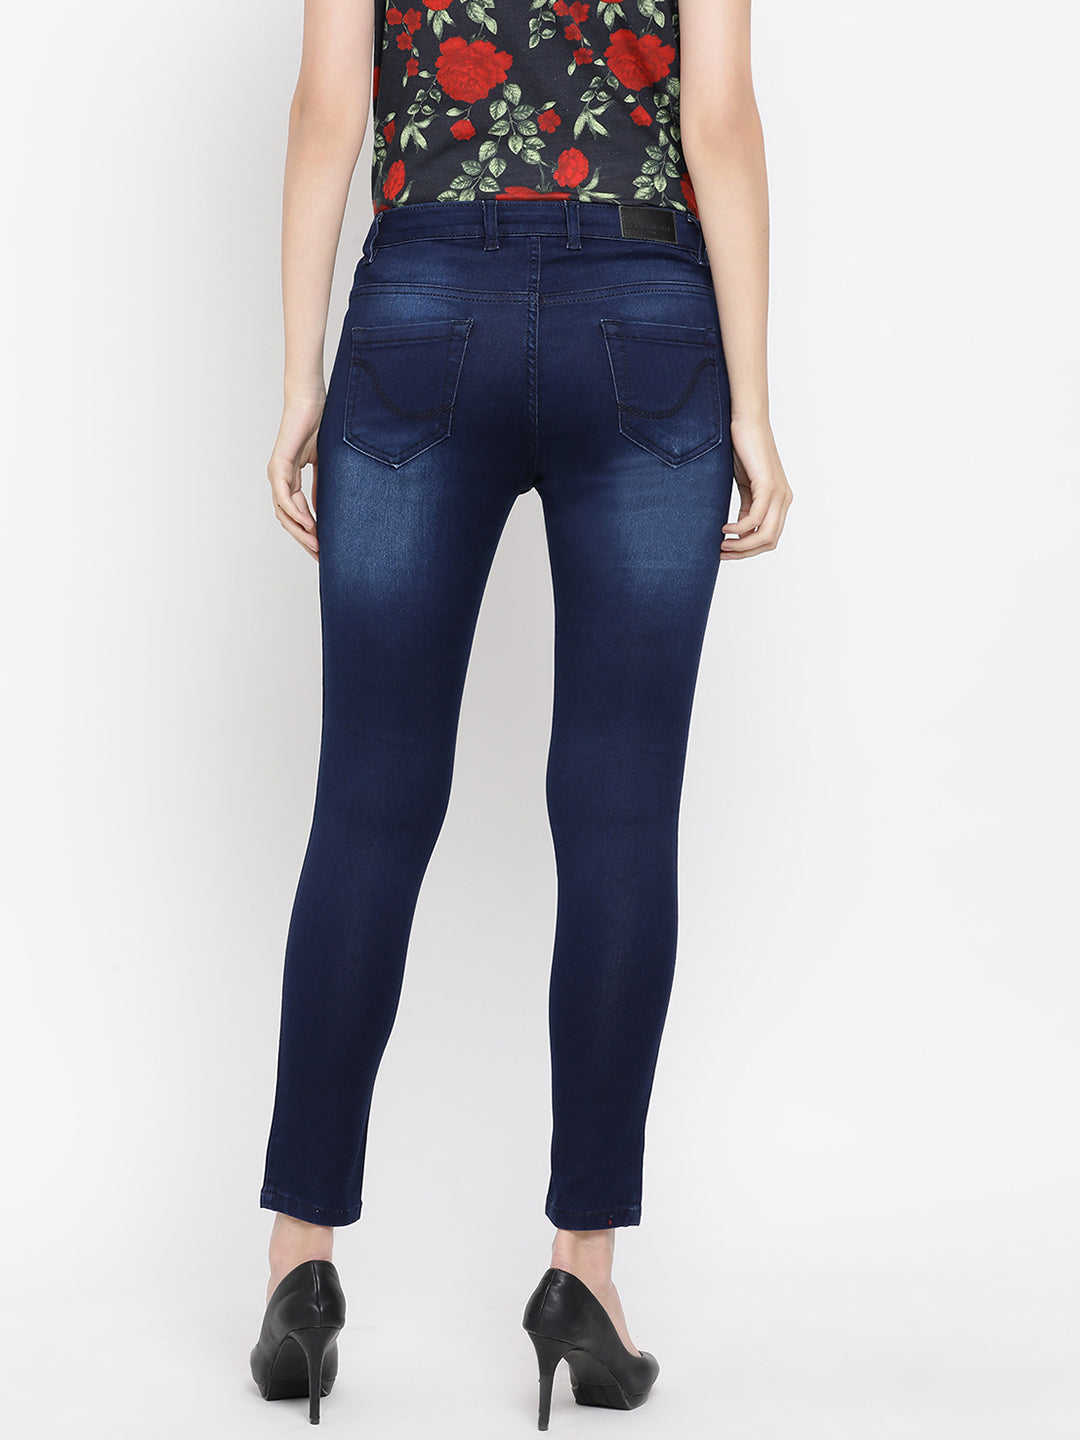 Blue Slim Fit Jeans - Women Jeans